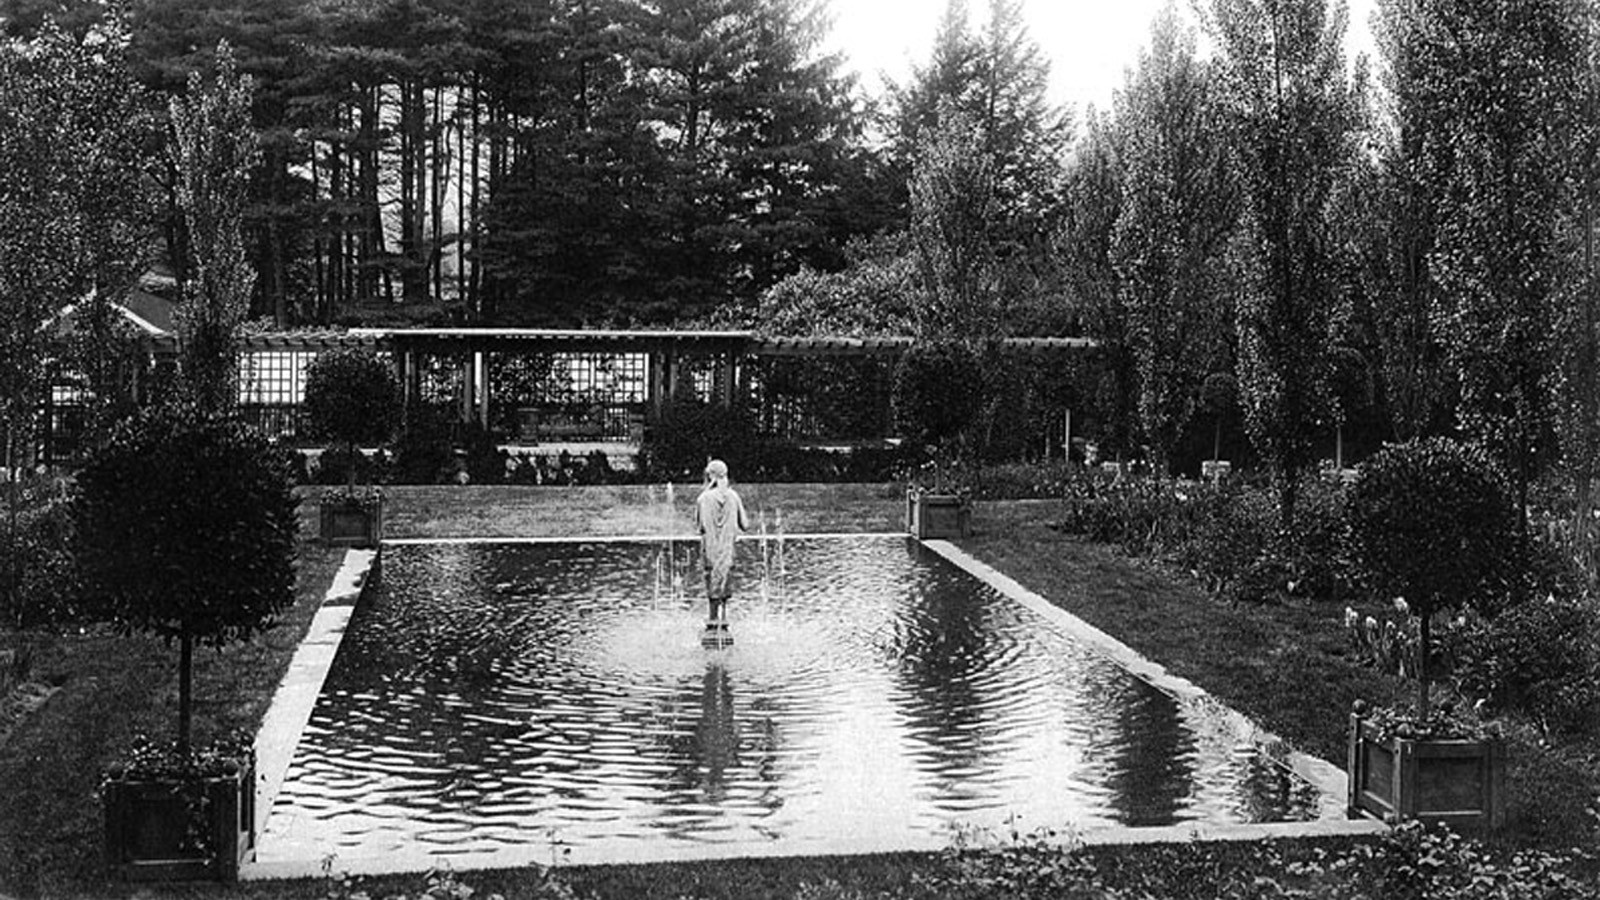 View of the Italian Garden’s reflecting pool and pergola, c. 1920.